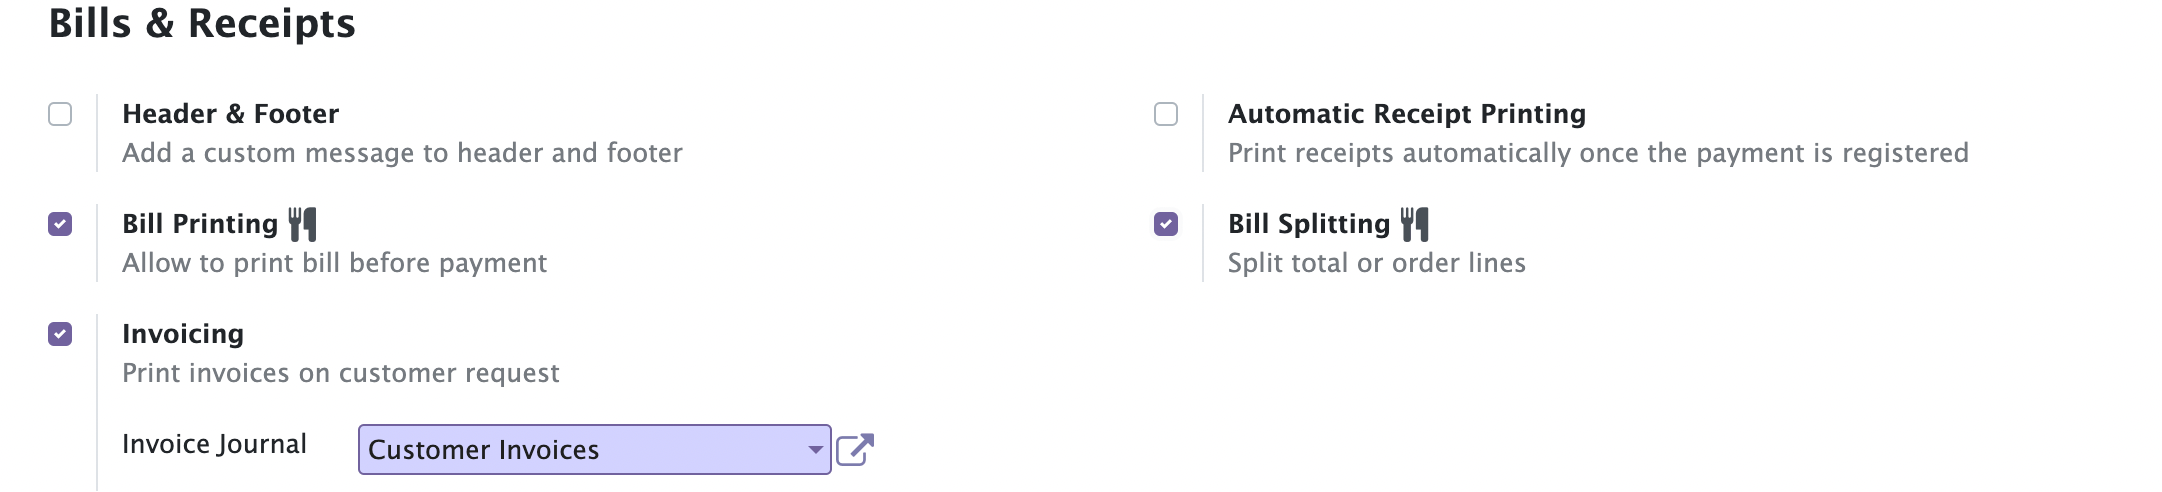 Bills and Receipts